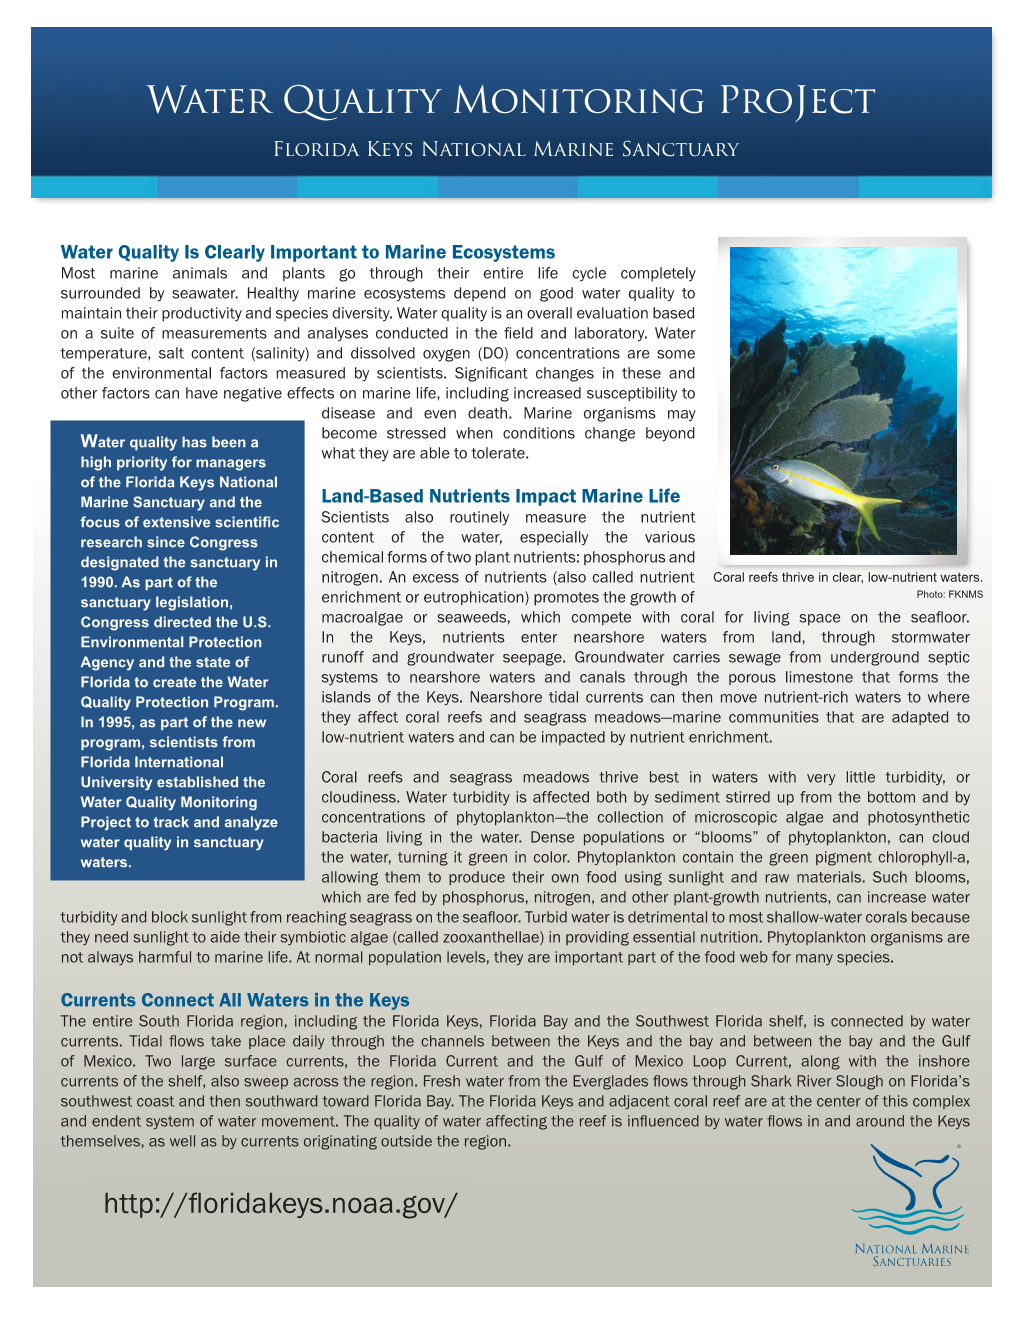 Water Quality Monitoring Project Florida Keys National Marine Sanctuary